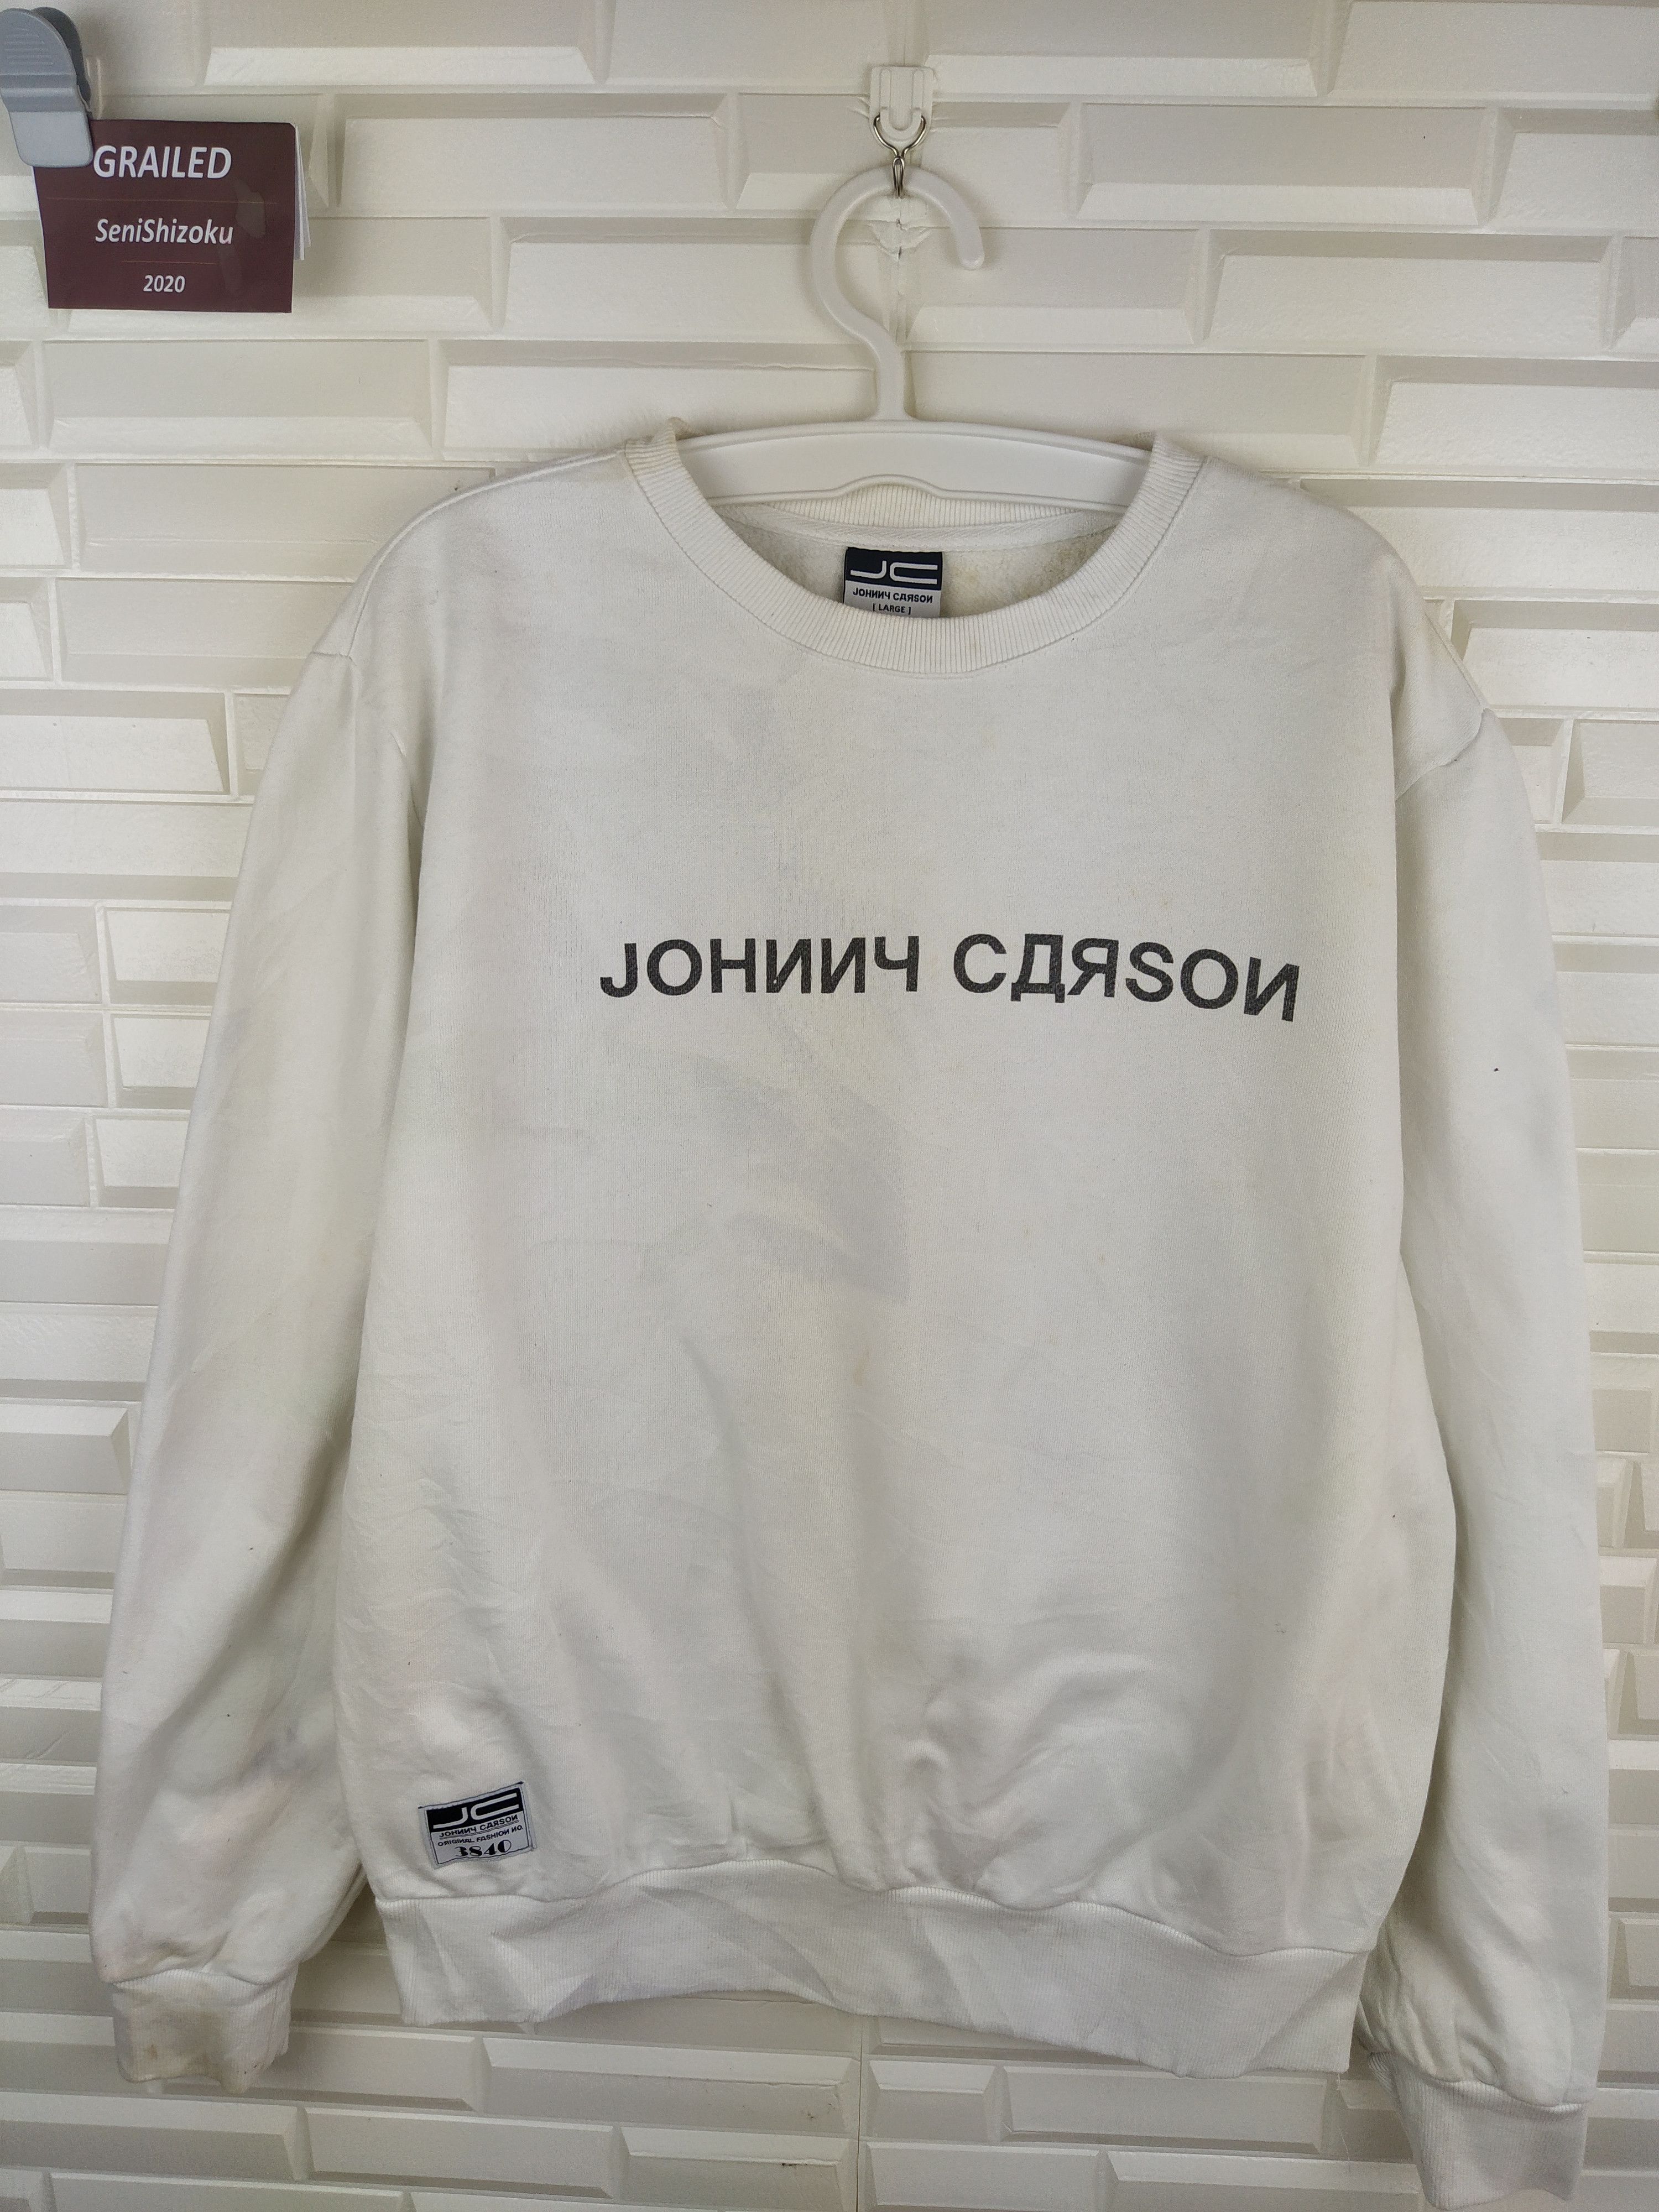 Johnny Carson Sweatshirts & Hoodies for Sale